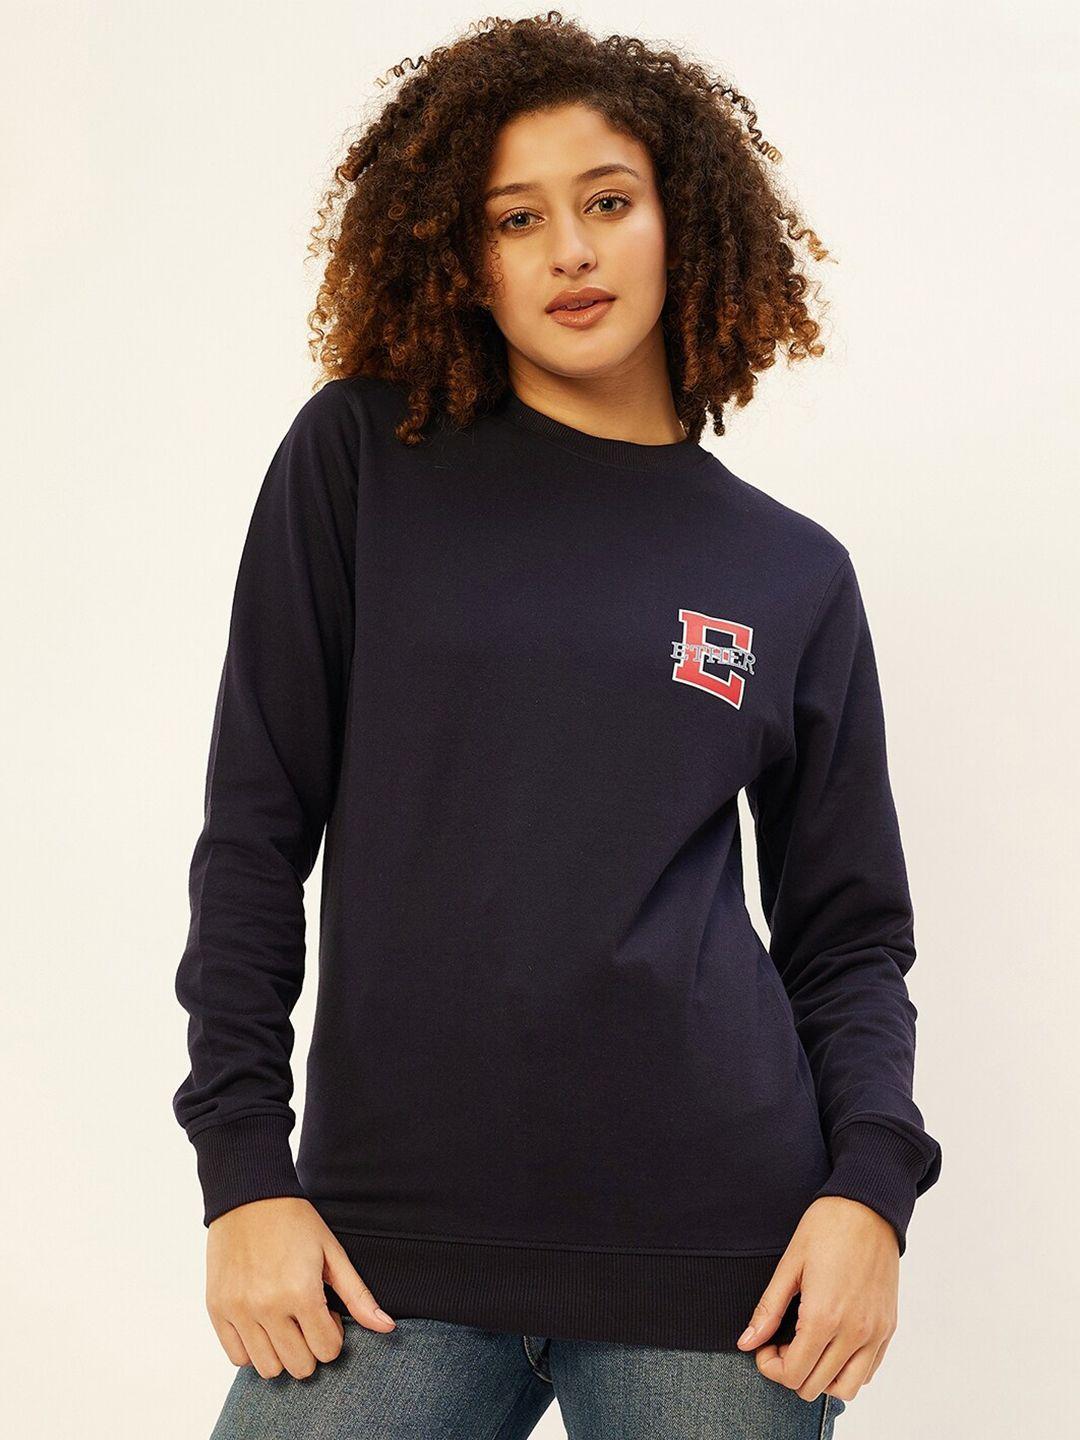 ether-brand-logo-printed-round-neck-long-sleeevs-pullover-sweatshirt